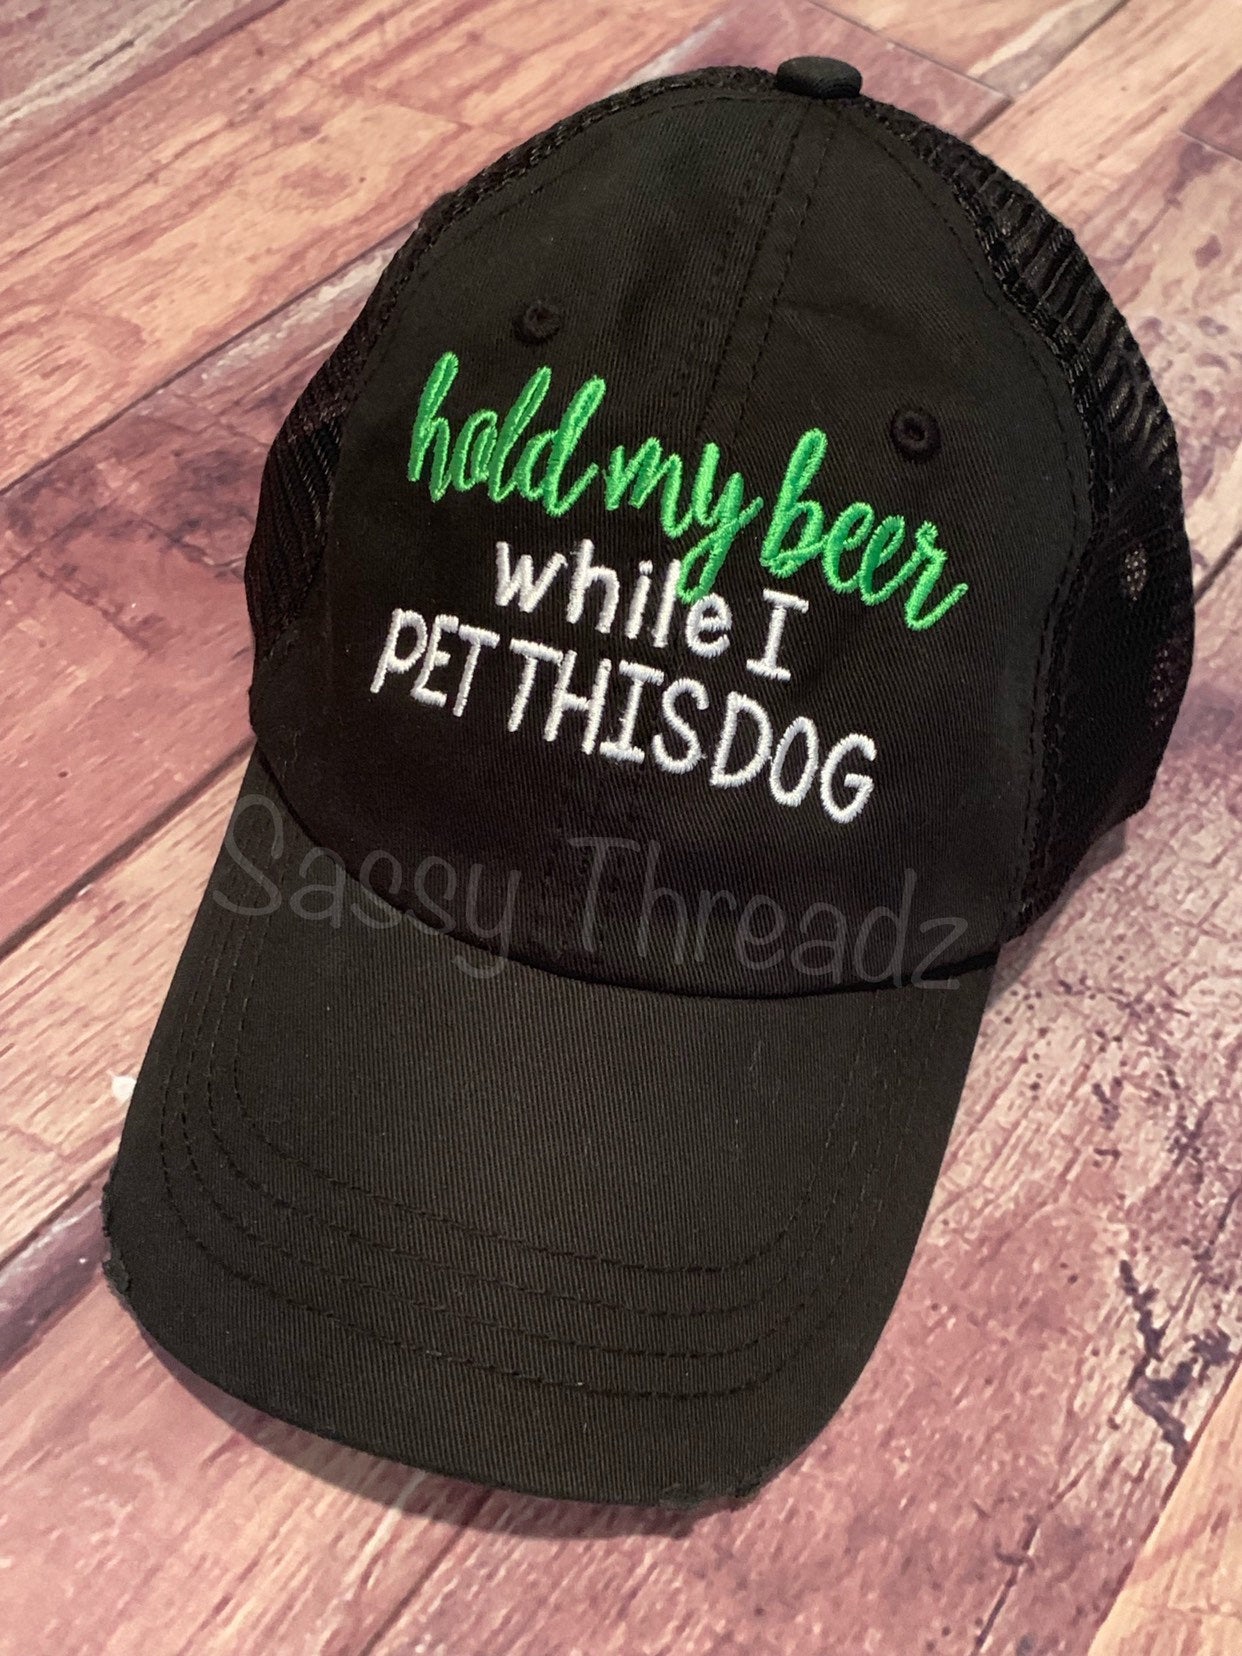 Hold My Beer While I Pet This Dog Trucker Hat - Sassy Threadz